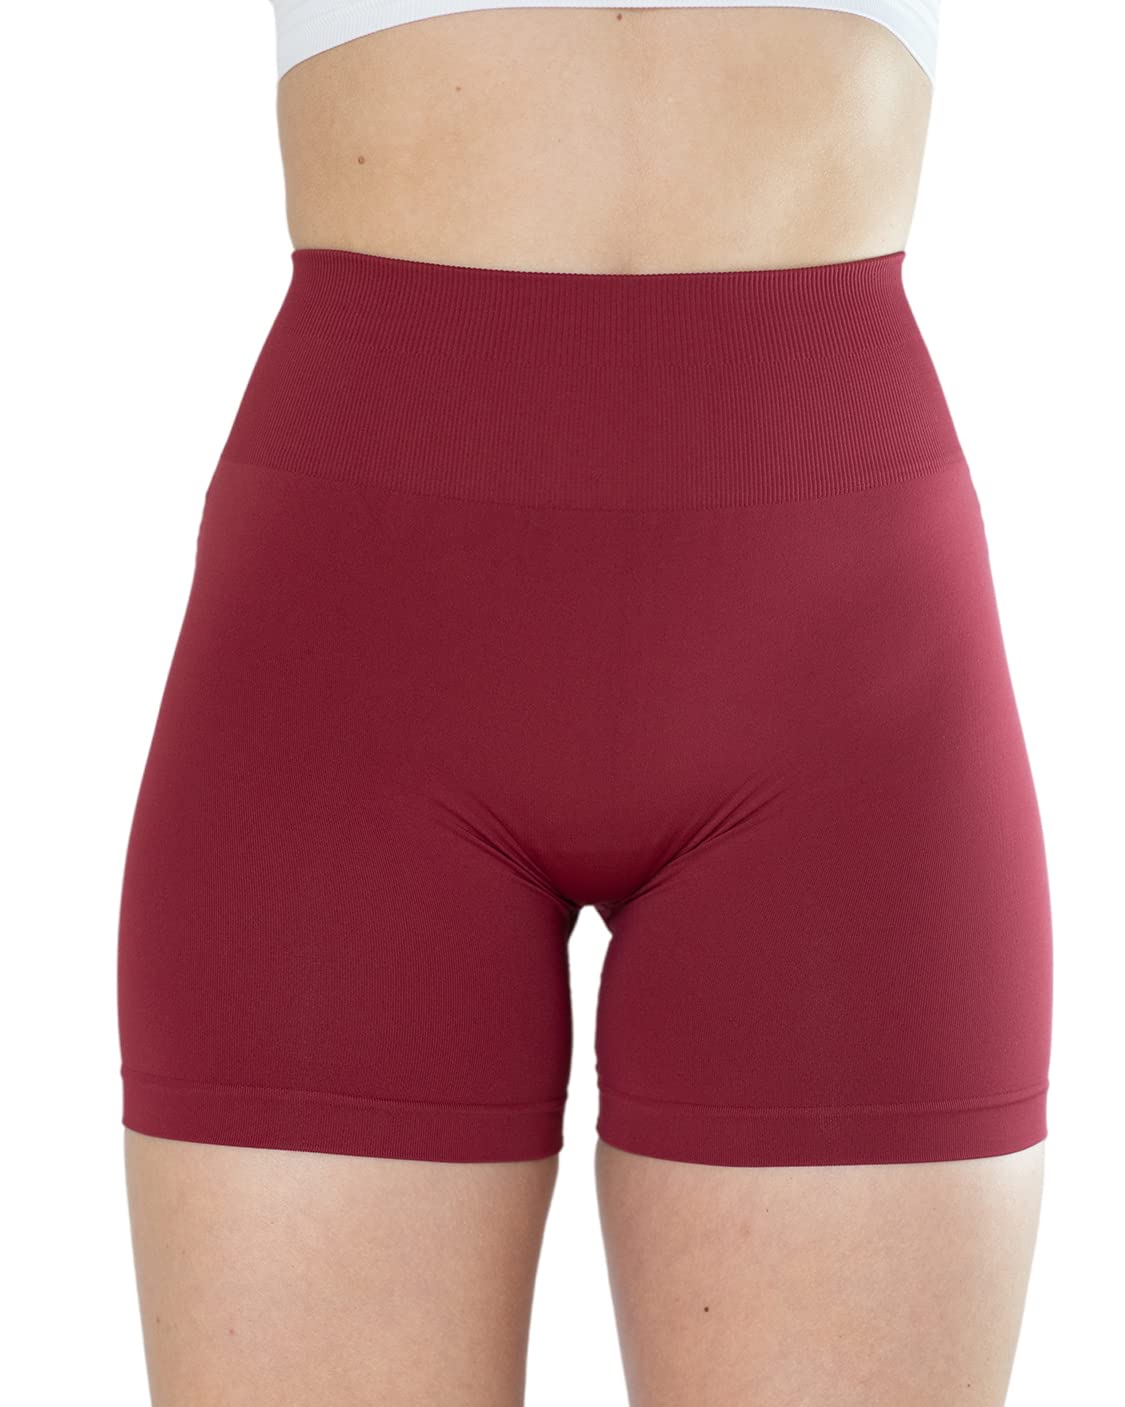 Buy AUROLA Intensify Workout Shorts Sets for Women Seamless